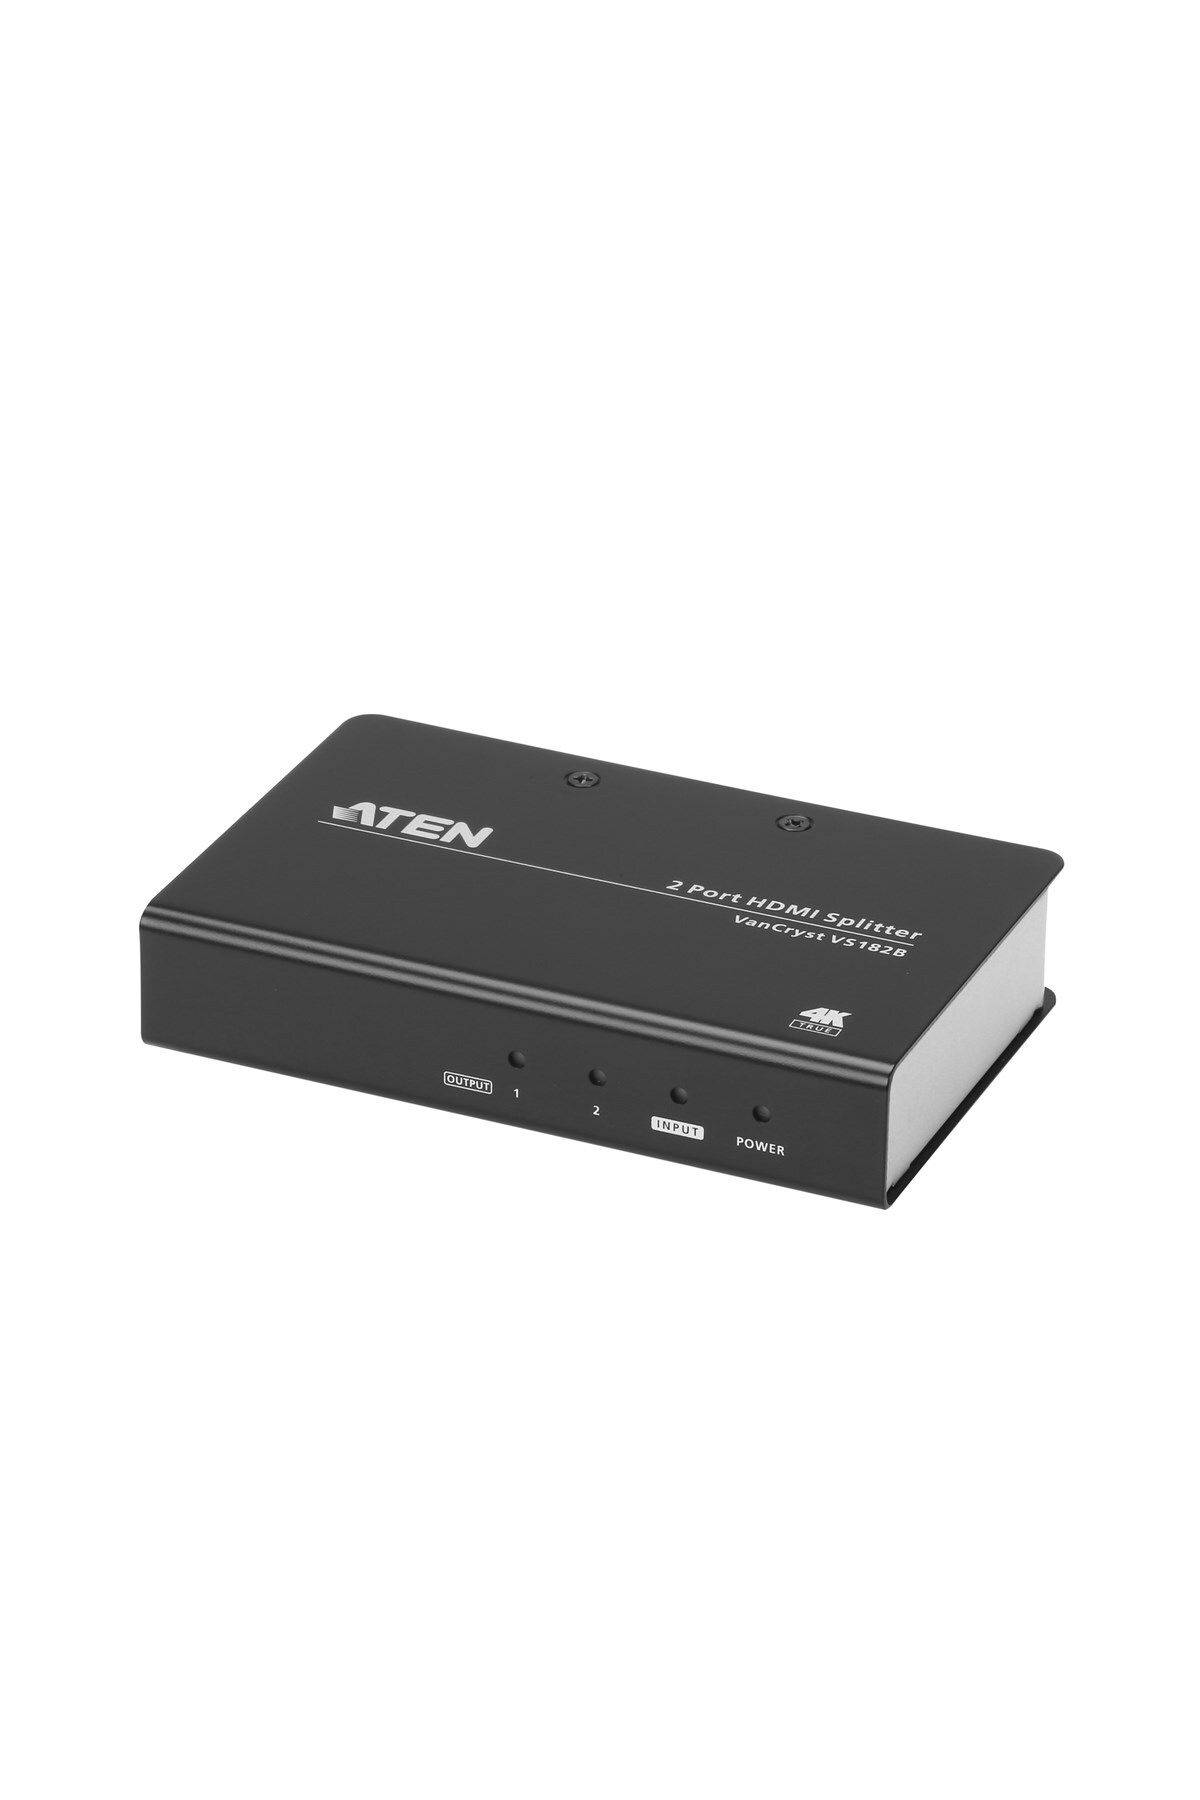 Aten 2-port True 4k Hdmı Çoklayıcı (2-PORT TRUE 4K HDMI SPLİTTER)